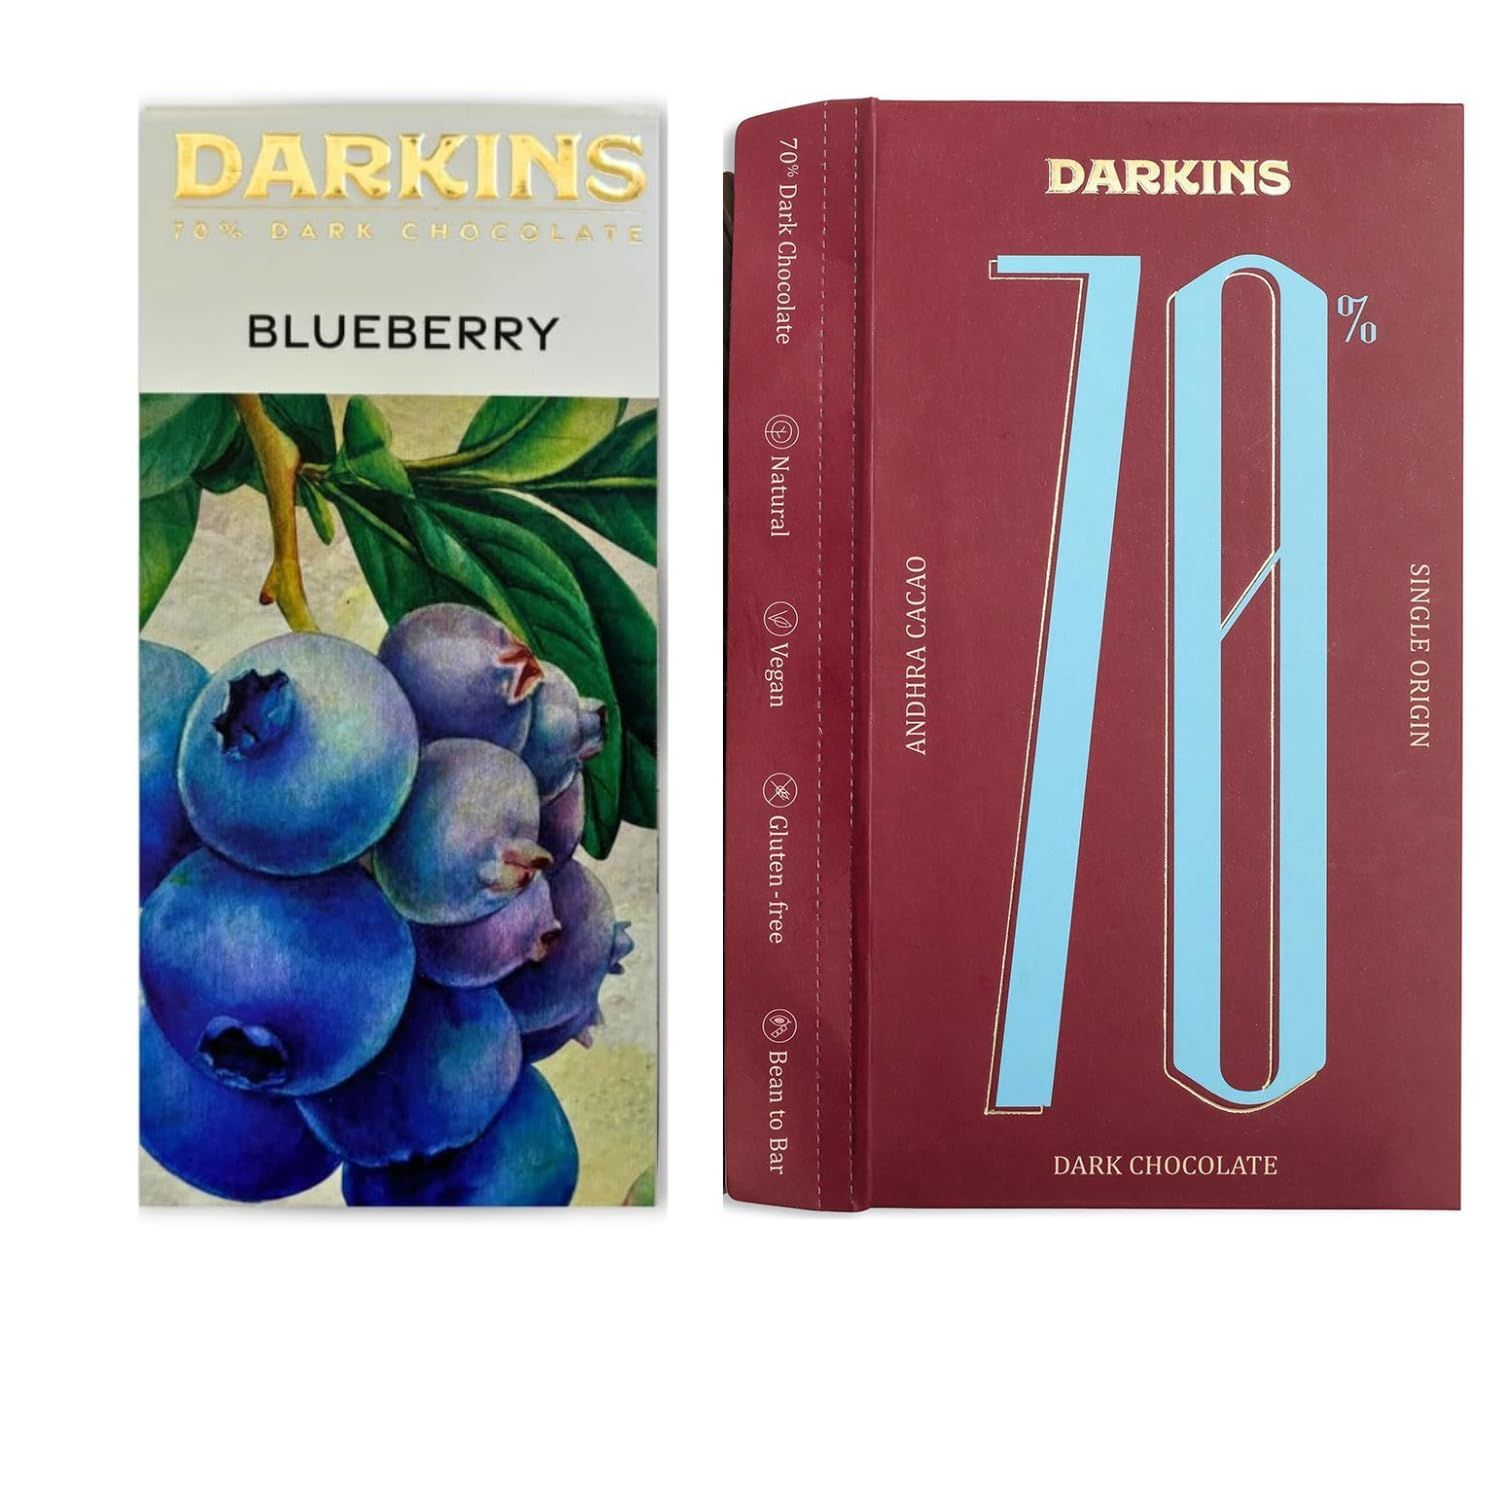 DARKINS Dark Chocolate | 70% Chocolate Blueberries | 70% Chocolate Single Origin | Gluten-free | Hand Crafted Chocolate | Unrefined Cane Sugar | Natural Chocolate Bar | Pack Of 2